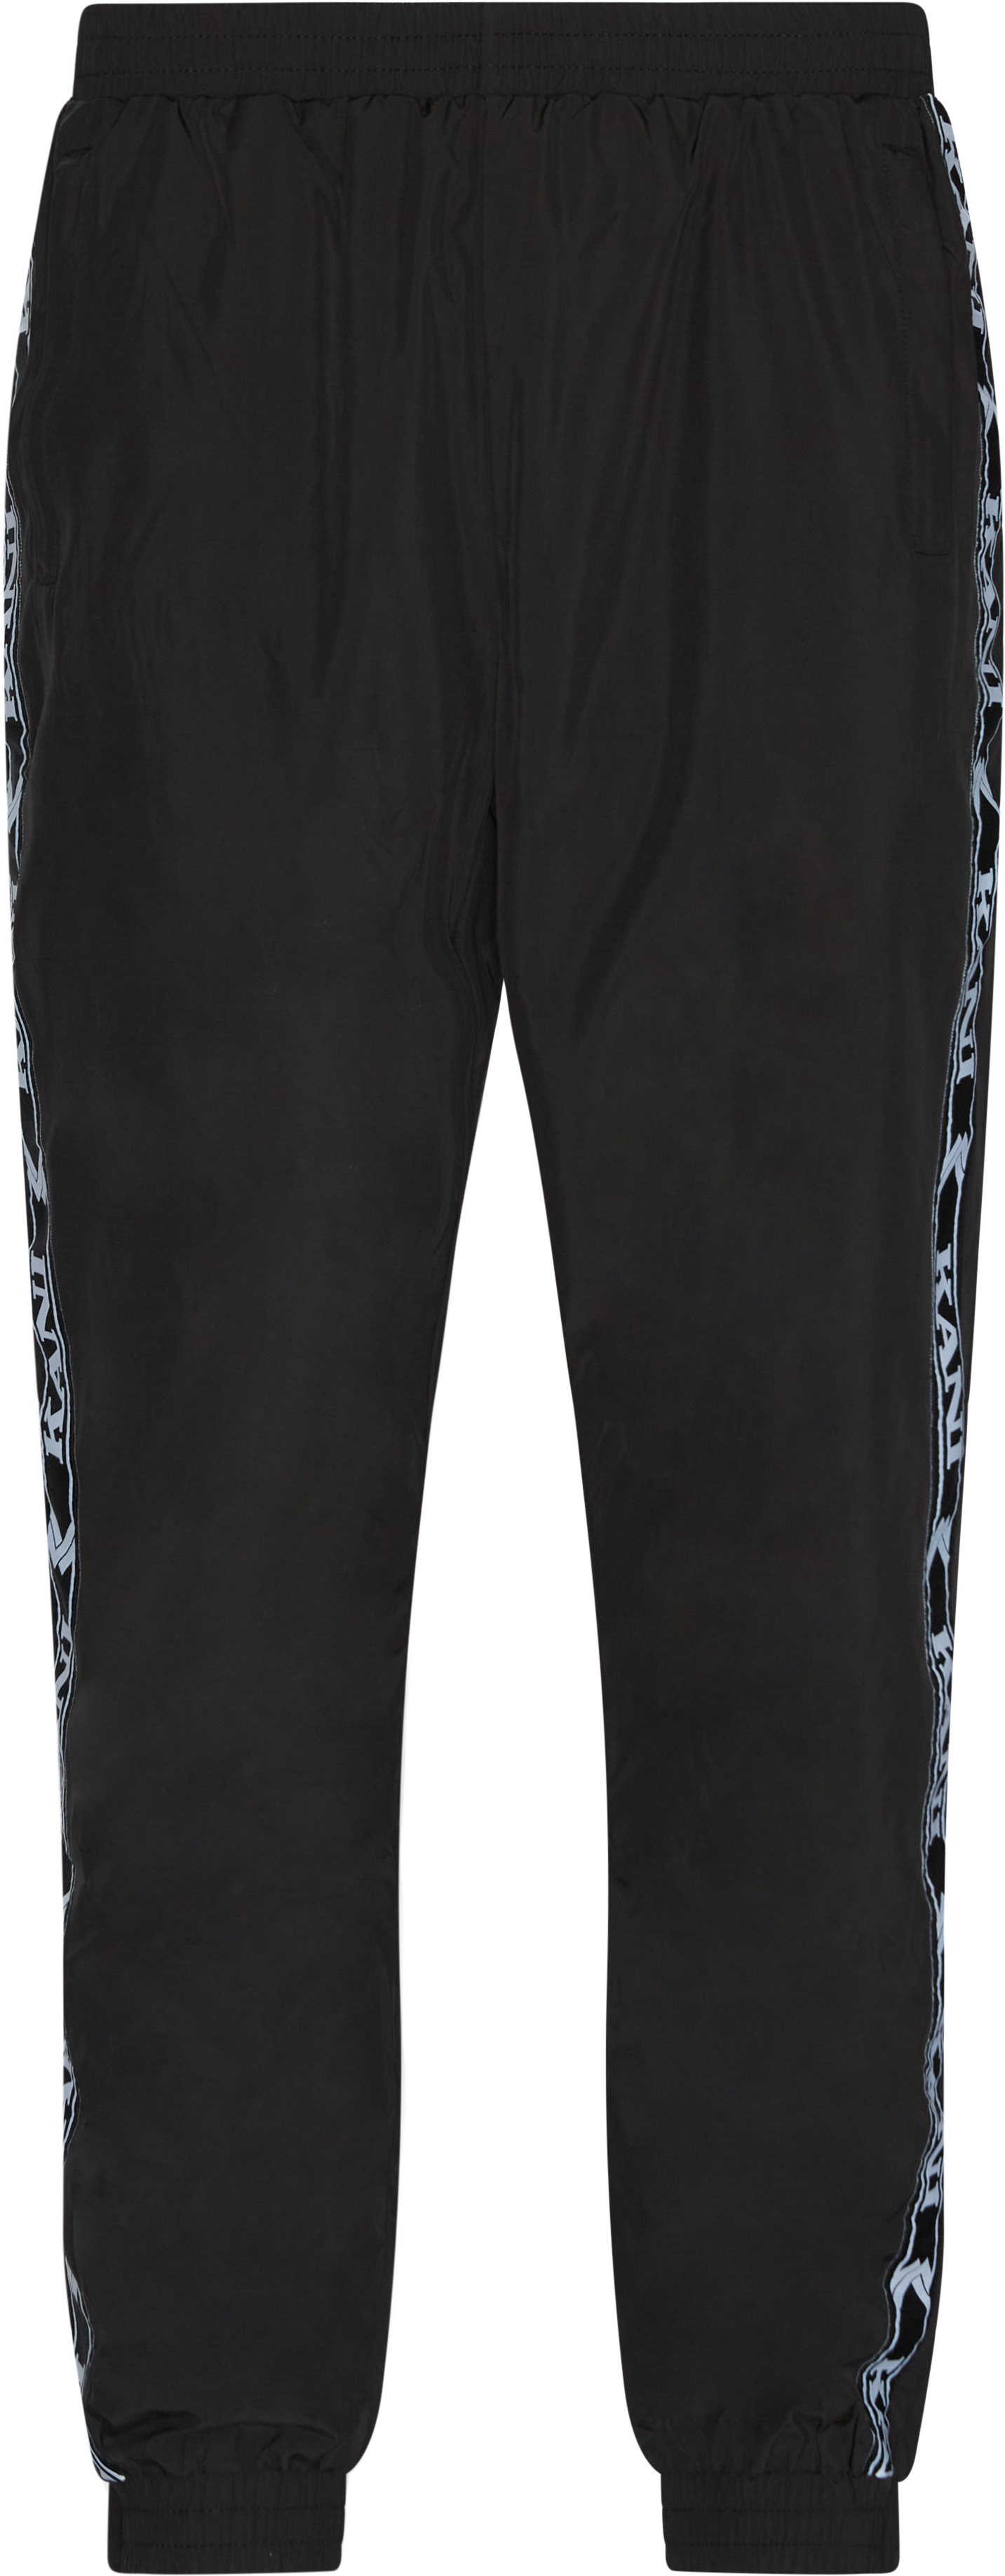 6006127 Trackpants - Trousers - Regular fit - Black